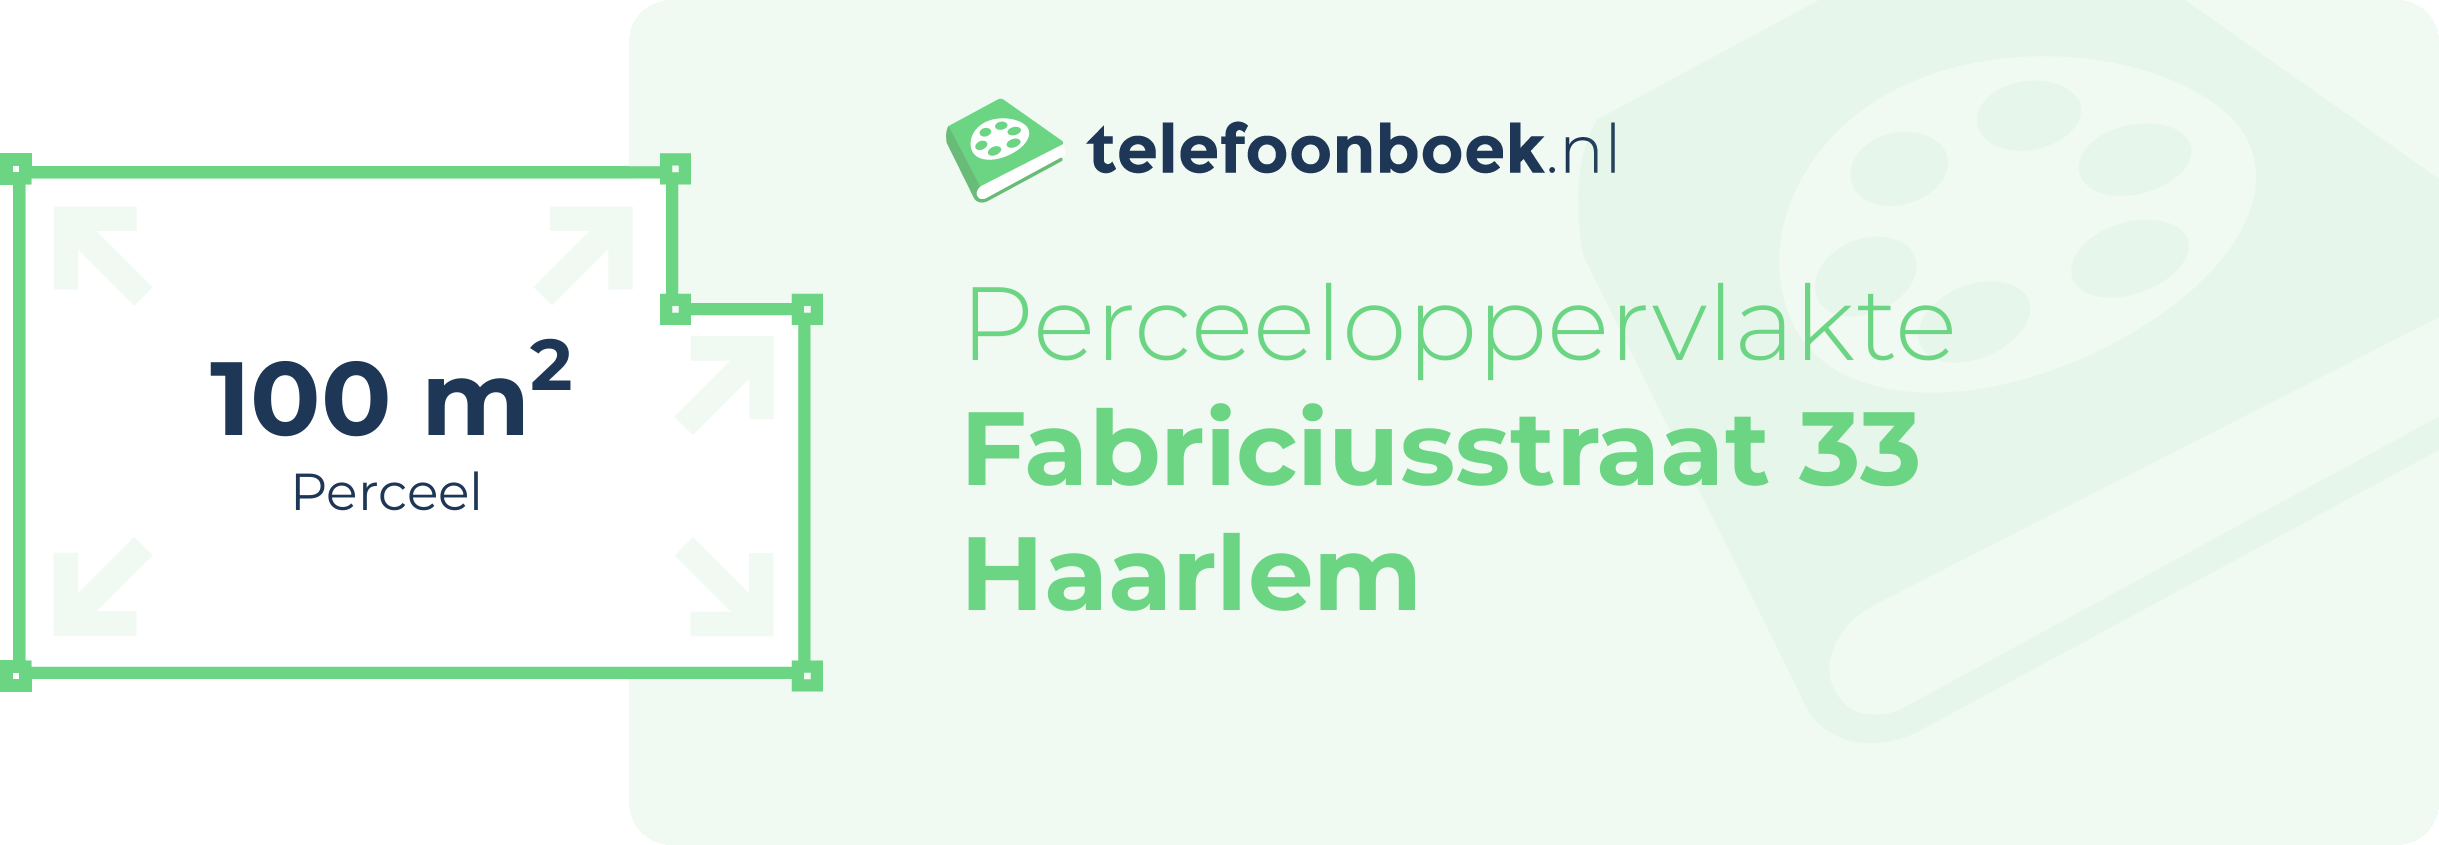 Perceeloppervlakte Fabriciusstraat 33 Haarlem